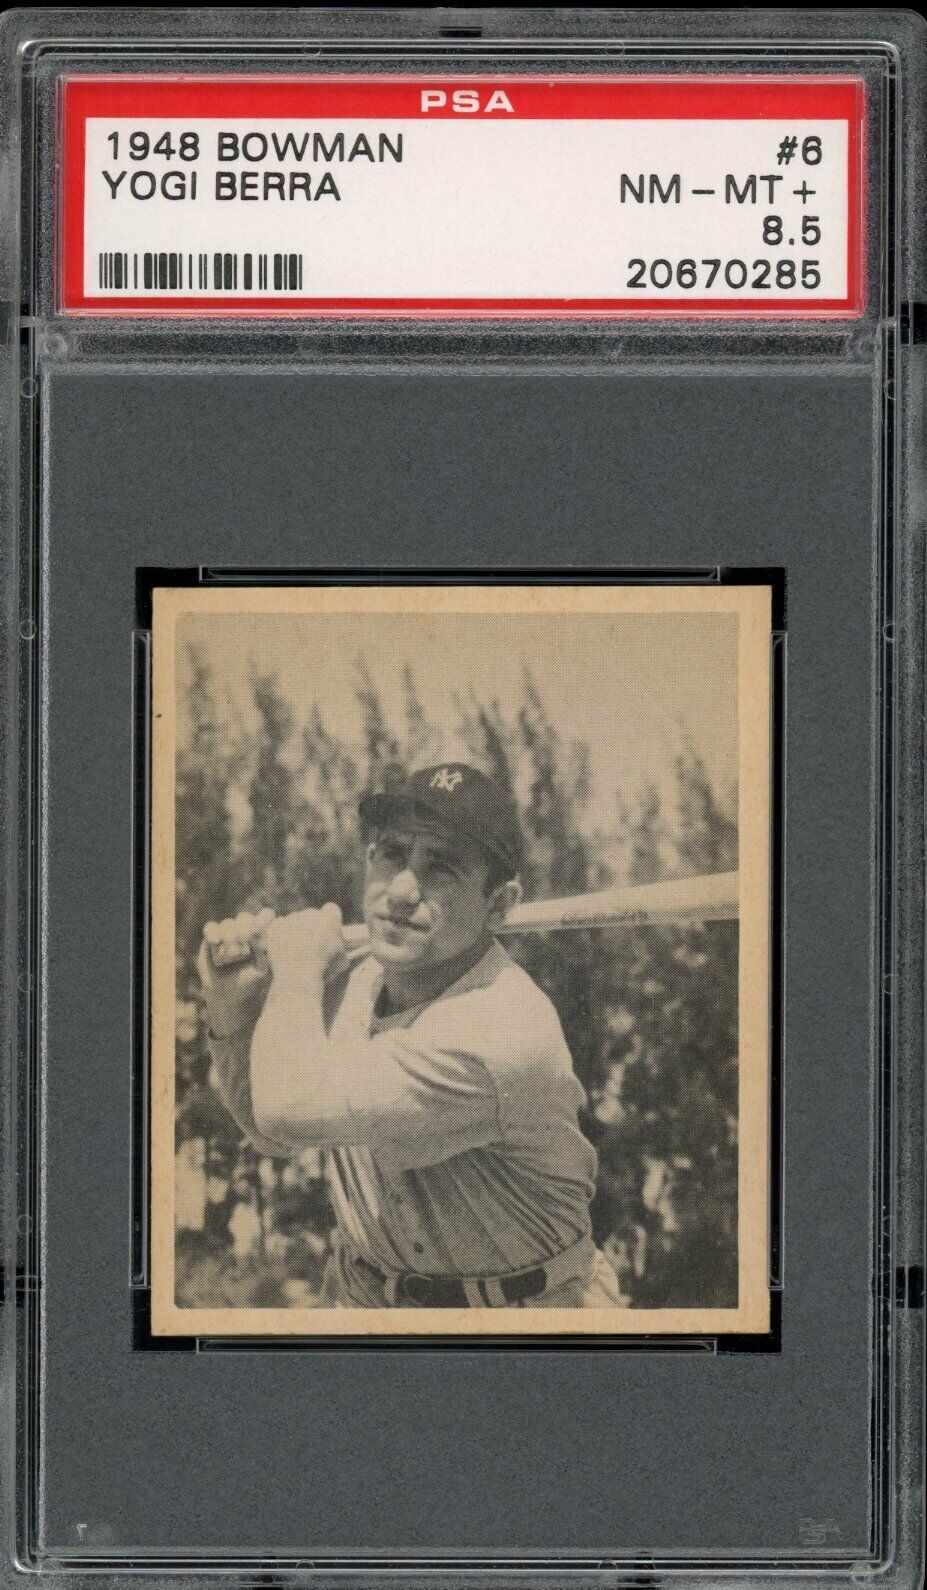 Yogi Berra 1948 Bowman Rookie Yankees Card #6 PSA 8.5  \